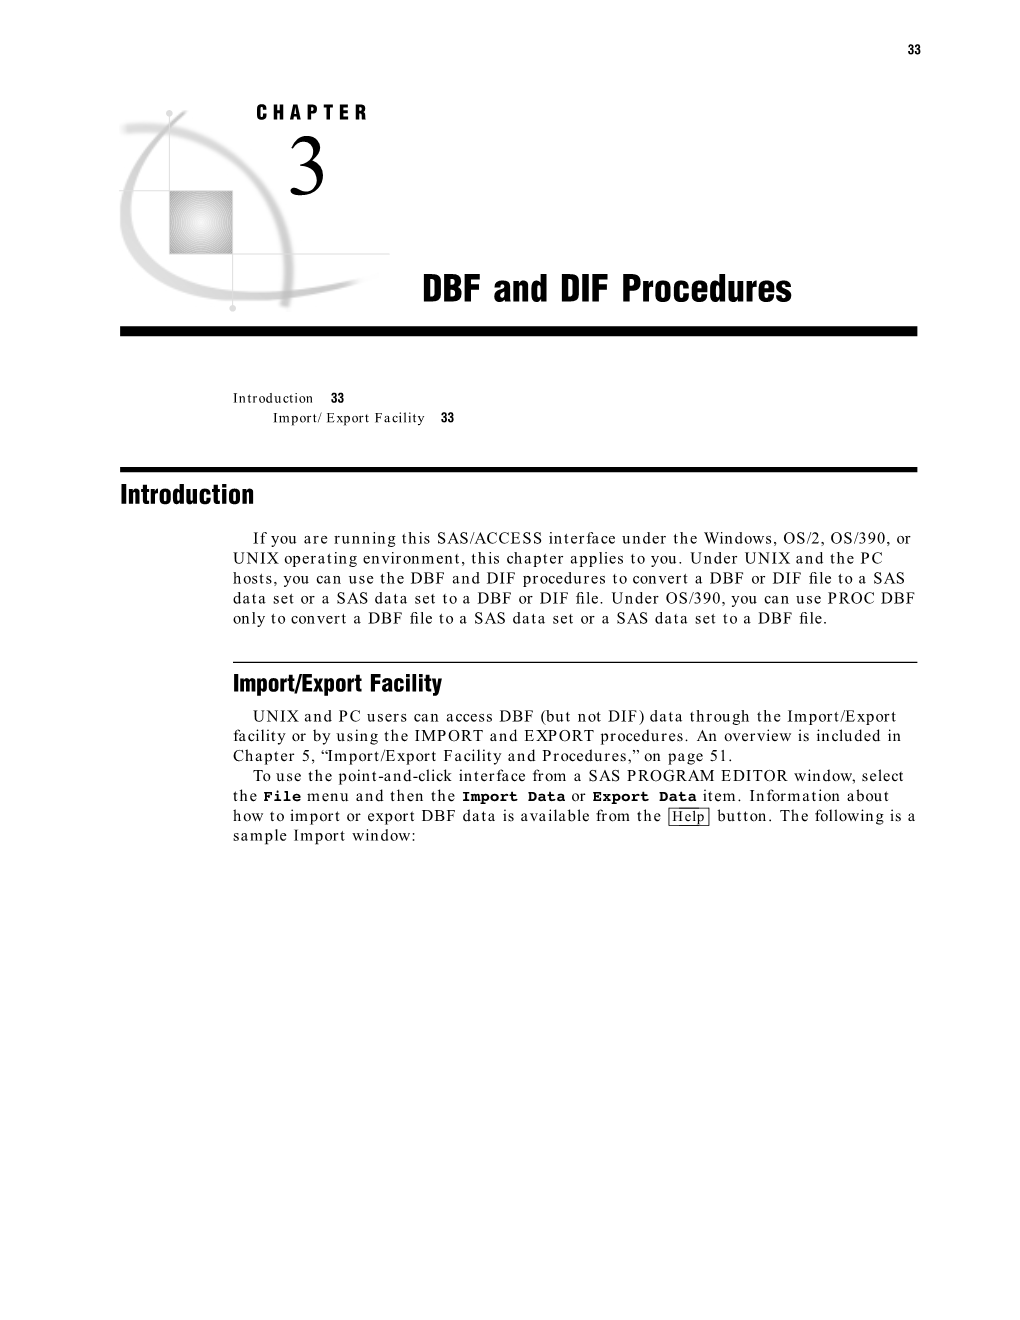 DBF and DIF Procedures